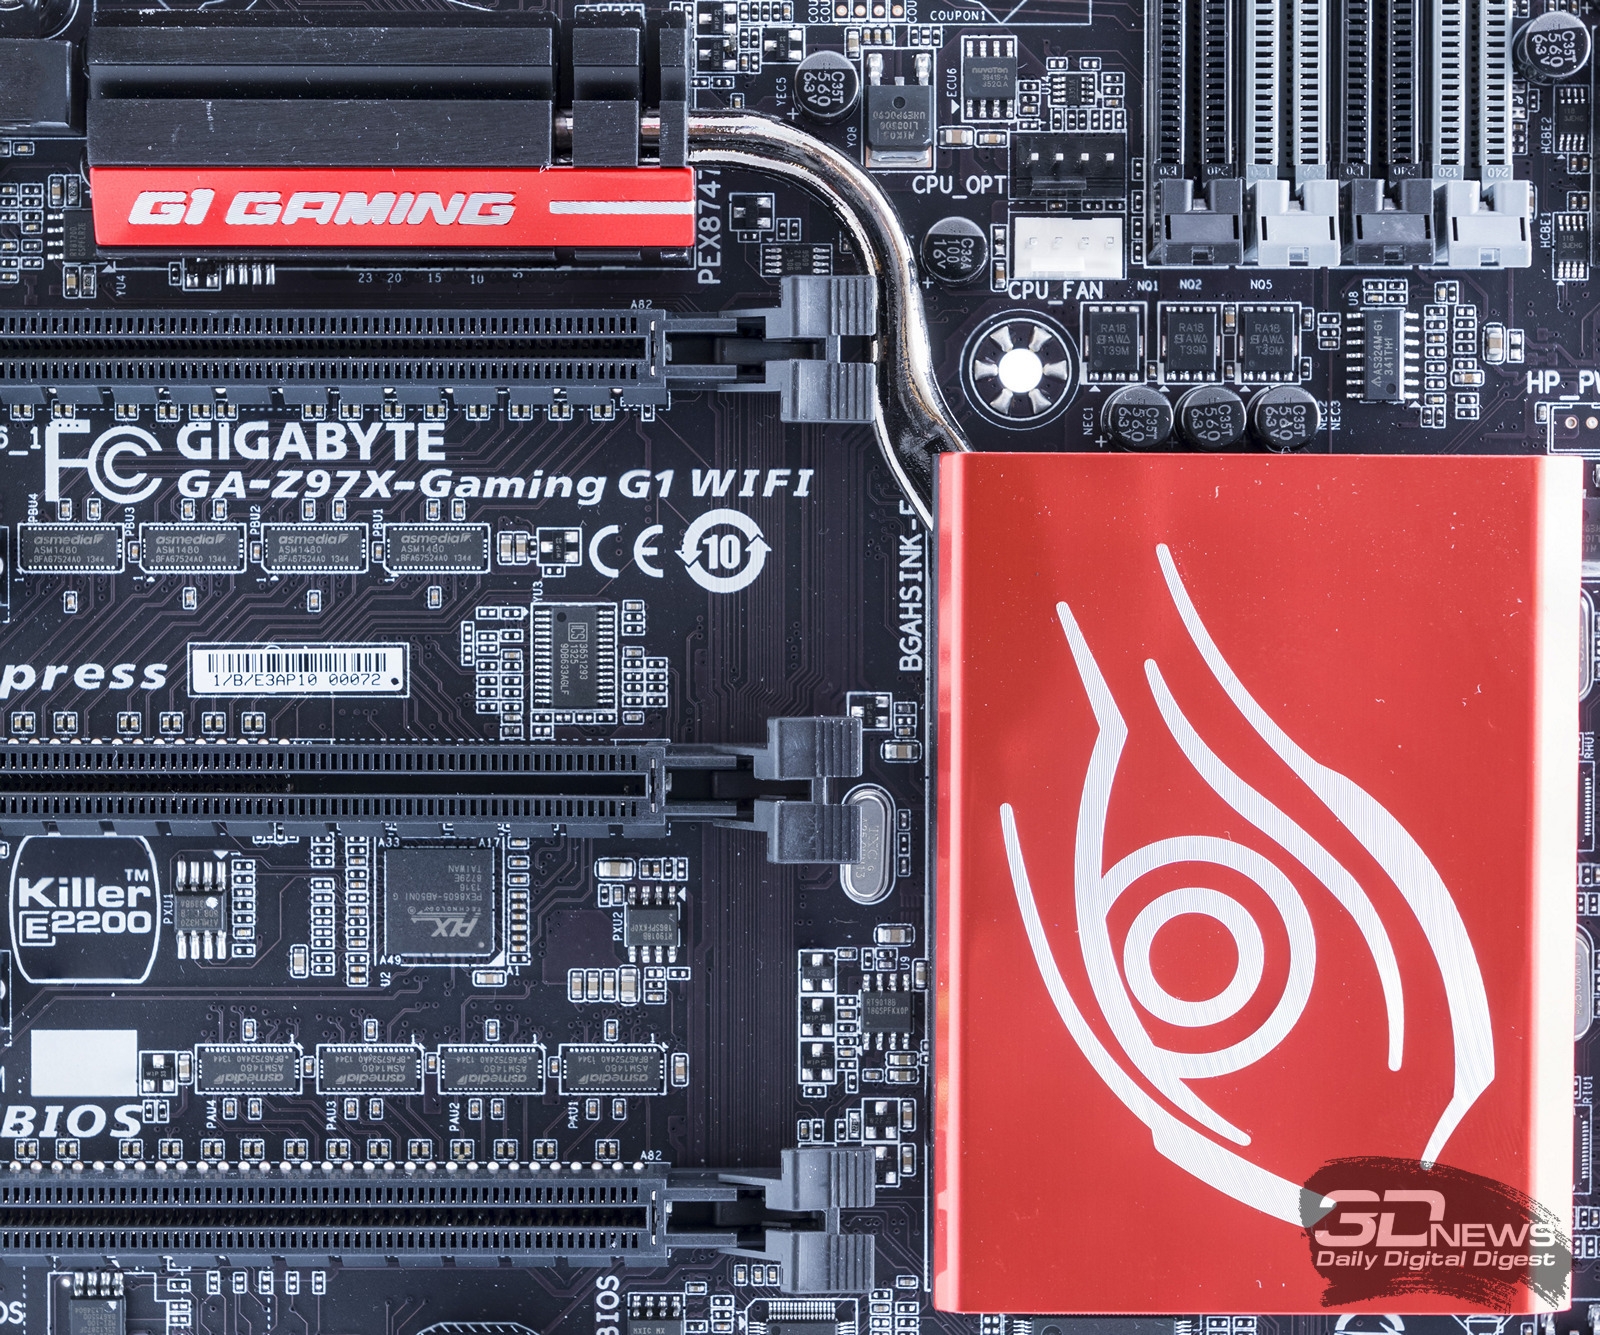 Плата gigabyte b660 gaming x. Gigabyte ga-z97x-Gaming g1. Gigabyte Gaming x. Материнская плата Gigabyte ga-z97x-Gaming g1 WIFI-BK. Звуковые сигналы материнской платы Gigabyte.